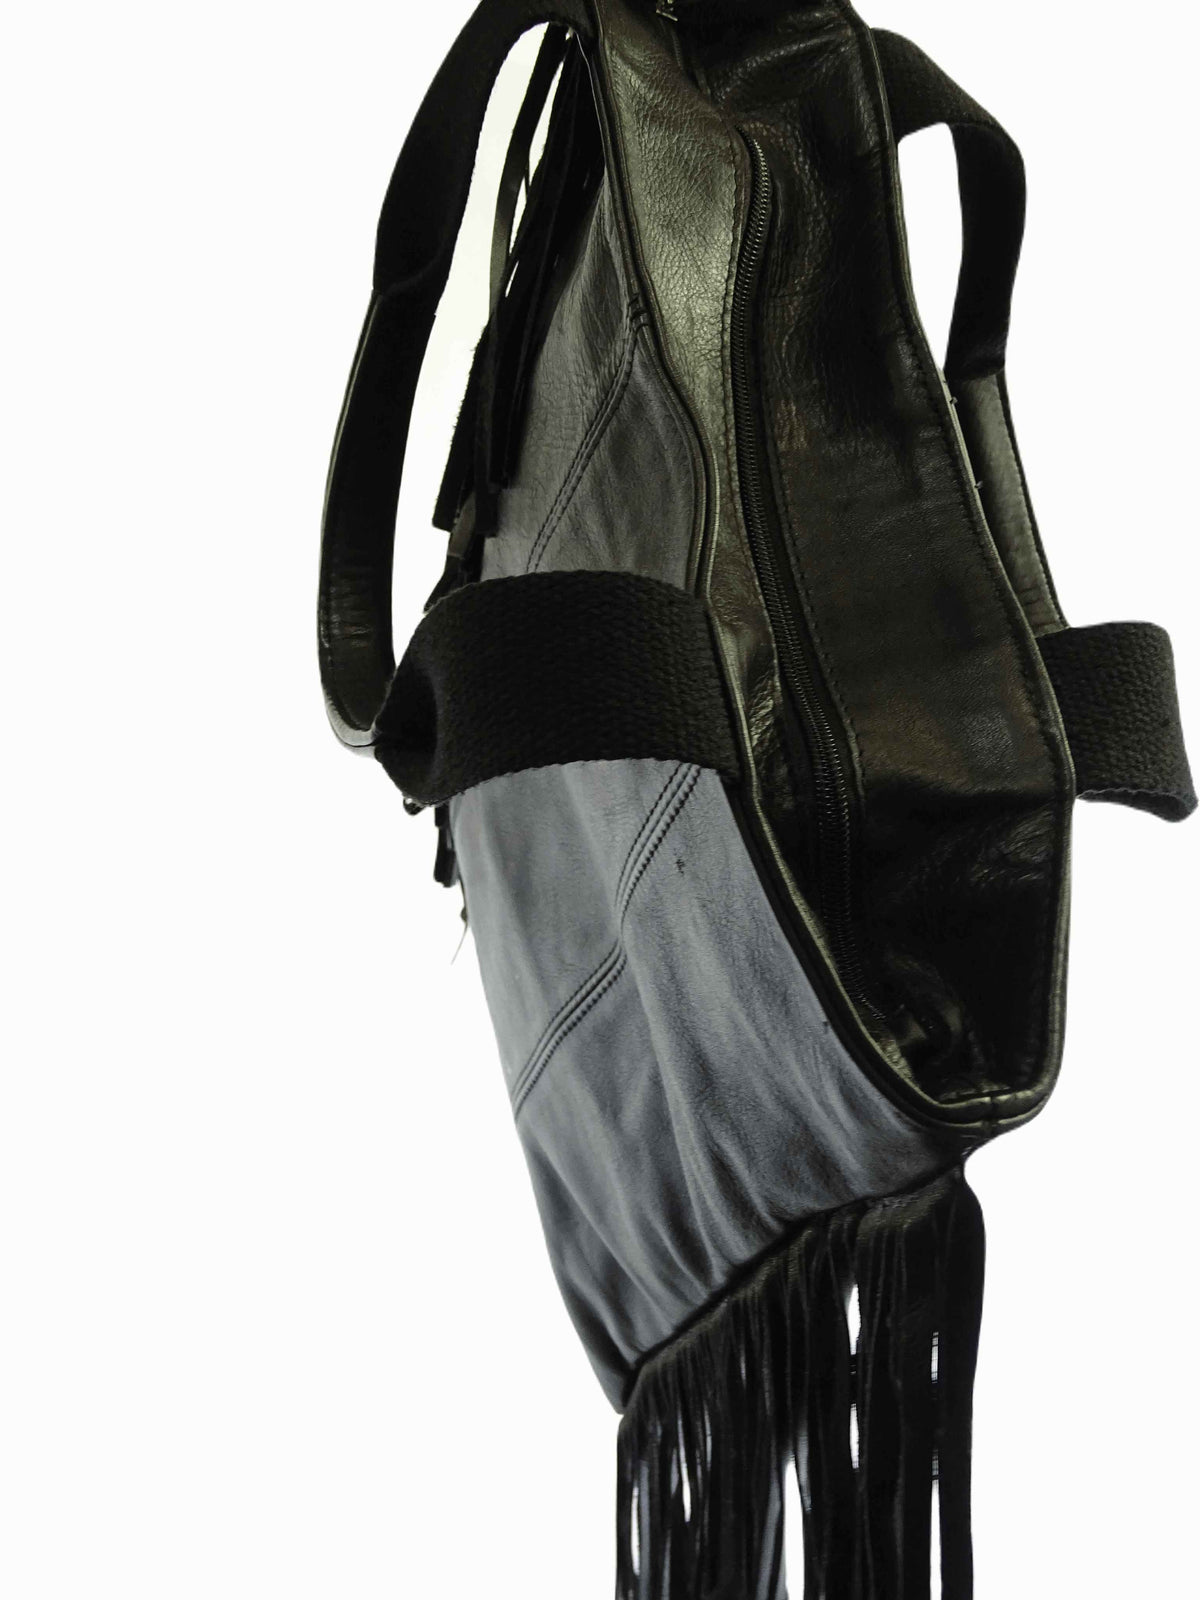 Imperial Italy Black Tassle Fringe Leather Bag